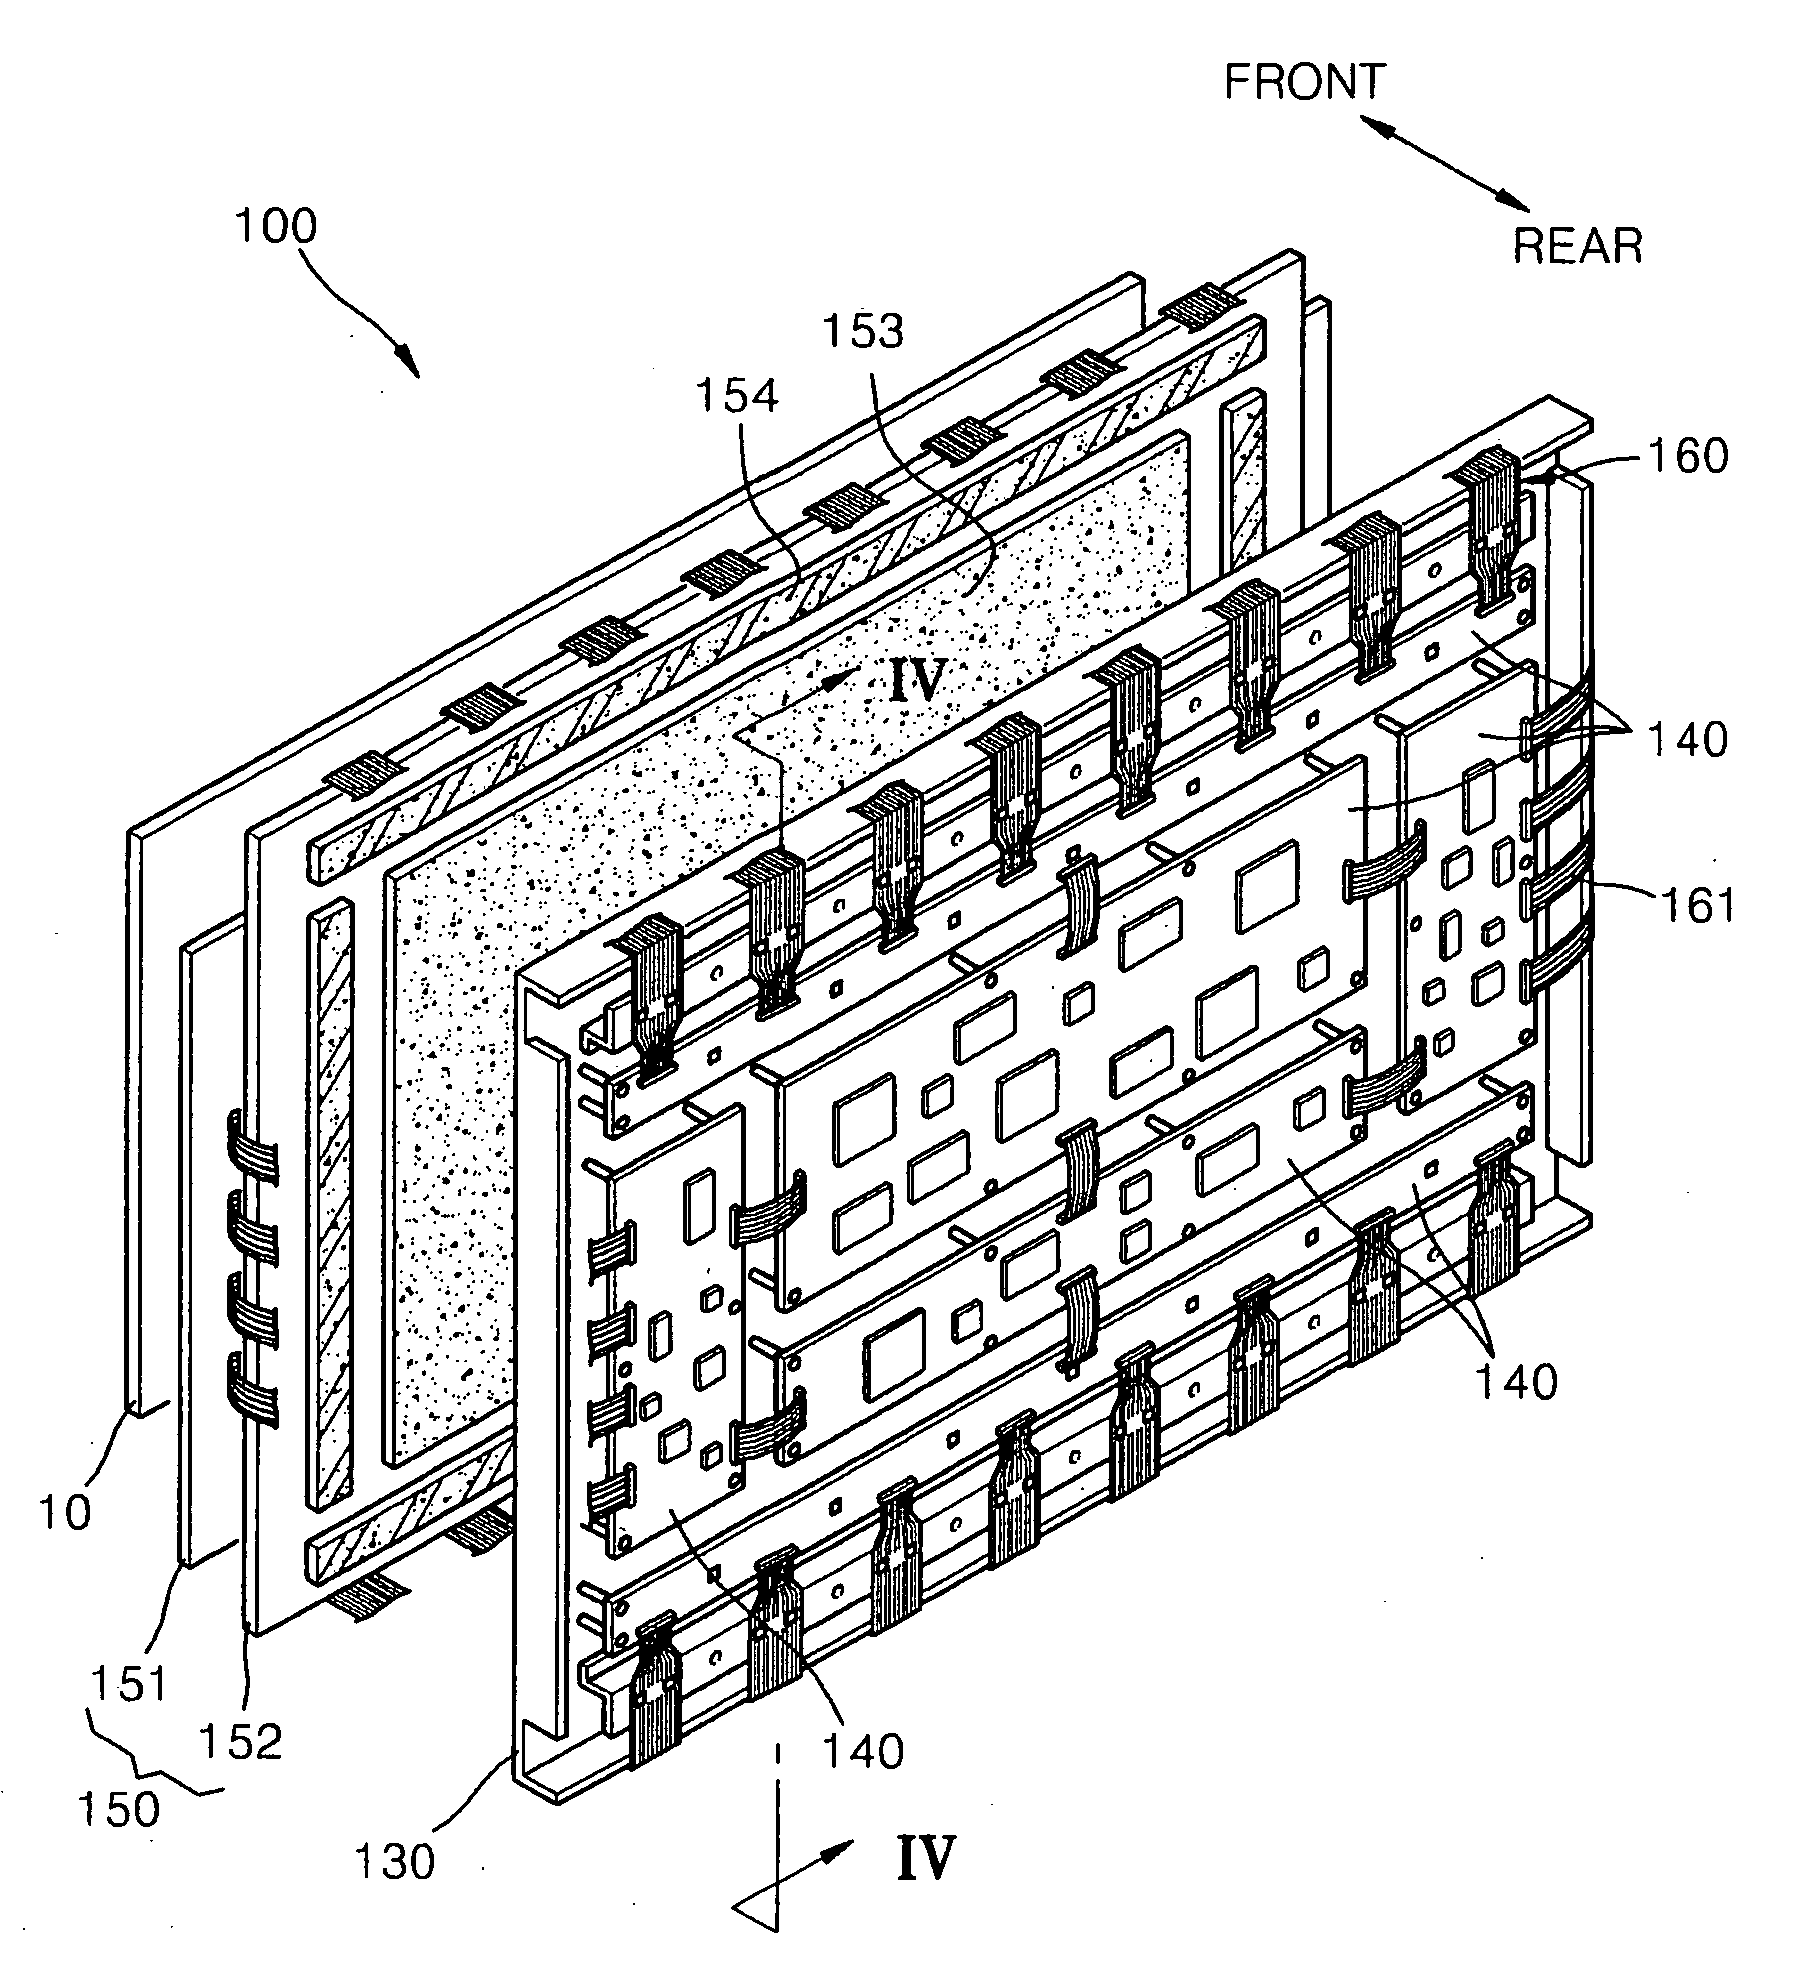 Filter for a plasma display apparatus